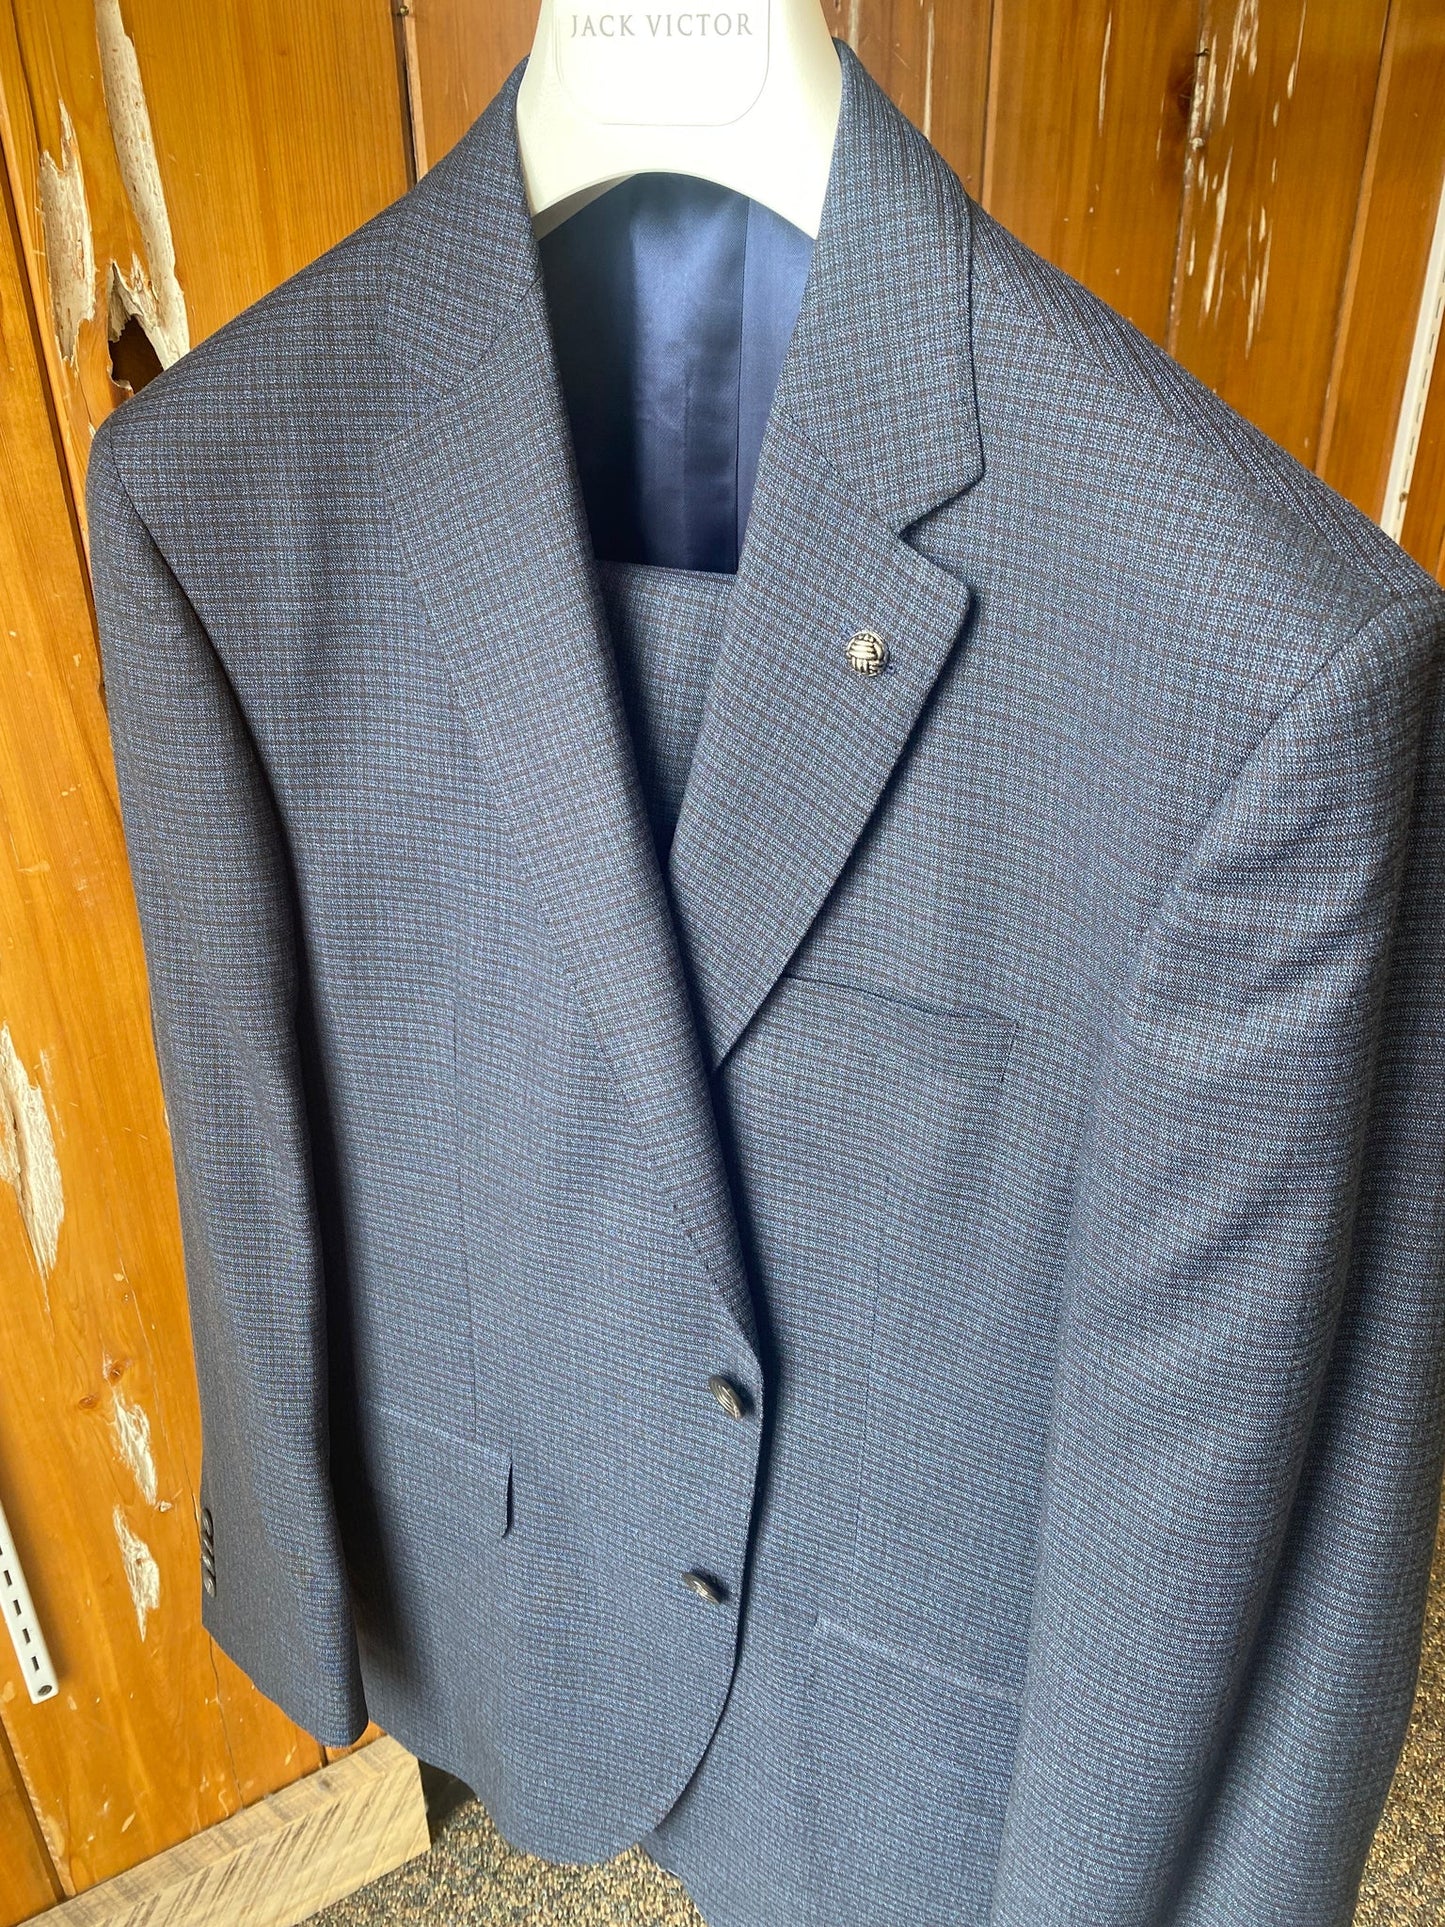 Jack Victor Super 120s Wool Suit in Blue Neat Pattern